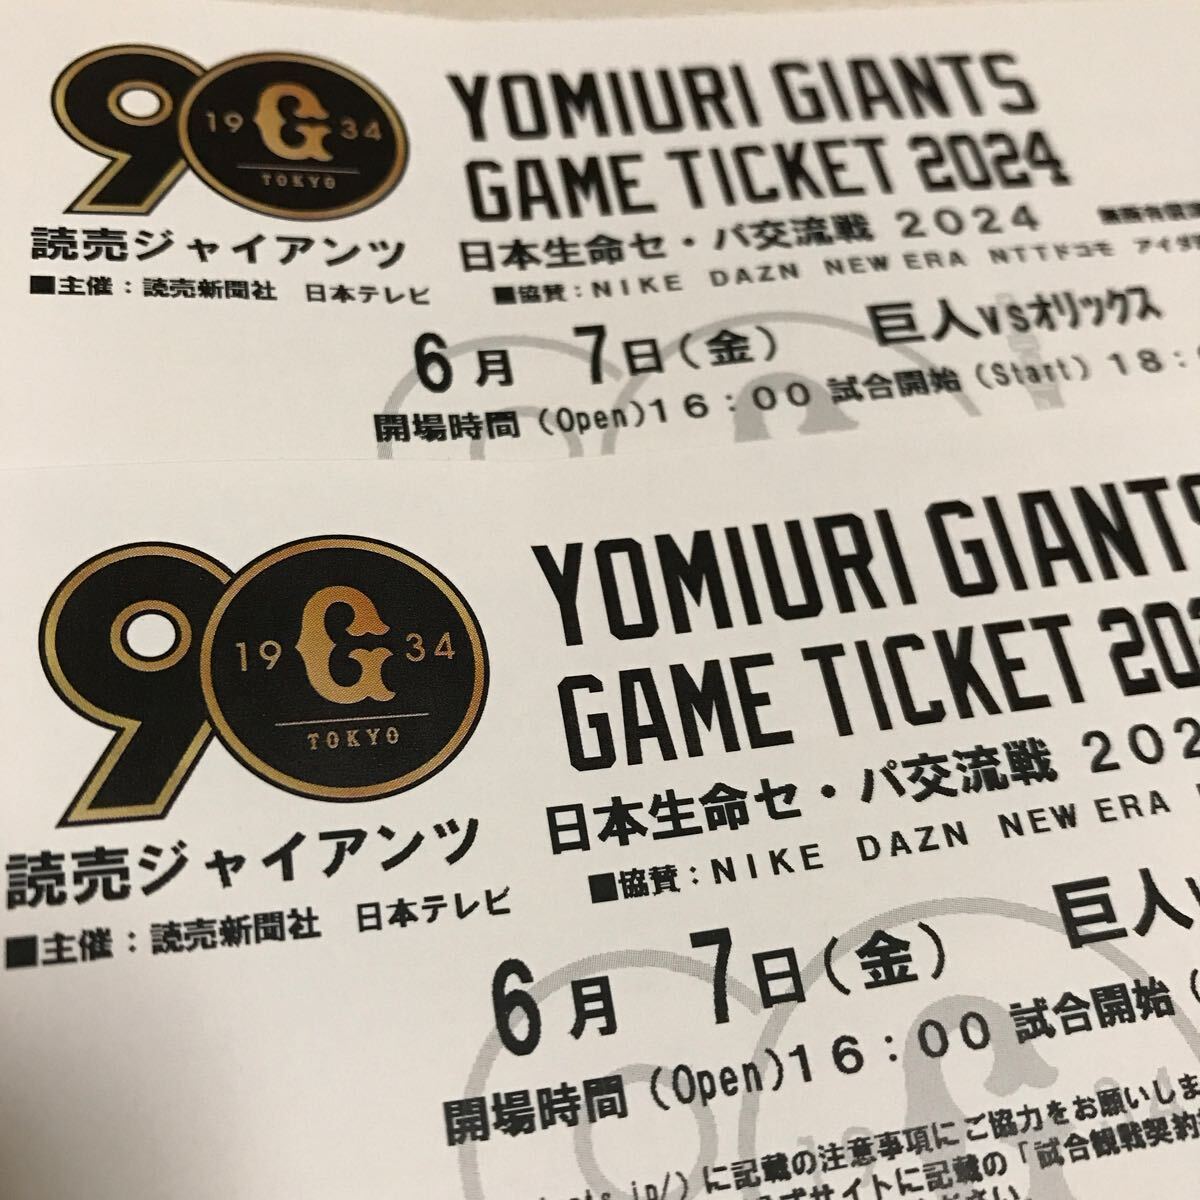  Yomiuri Giants Japan life se*pa alternating current war 2024 6 month 7 day . person vs Orix 1 floor 3. side designation seat A pair ticket orange soul Uni Home distribution day 